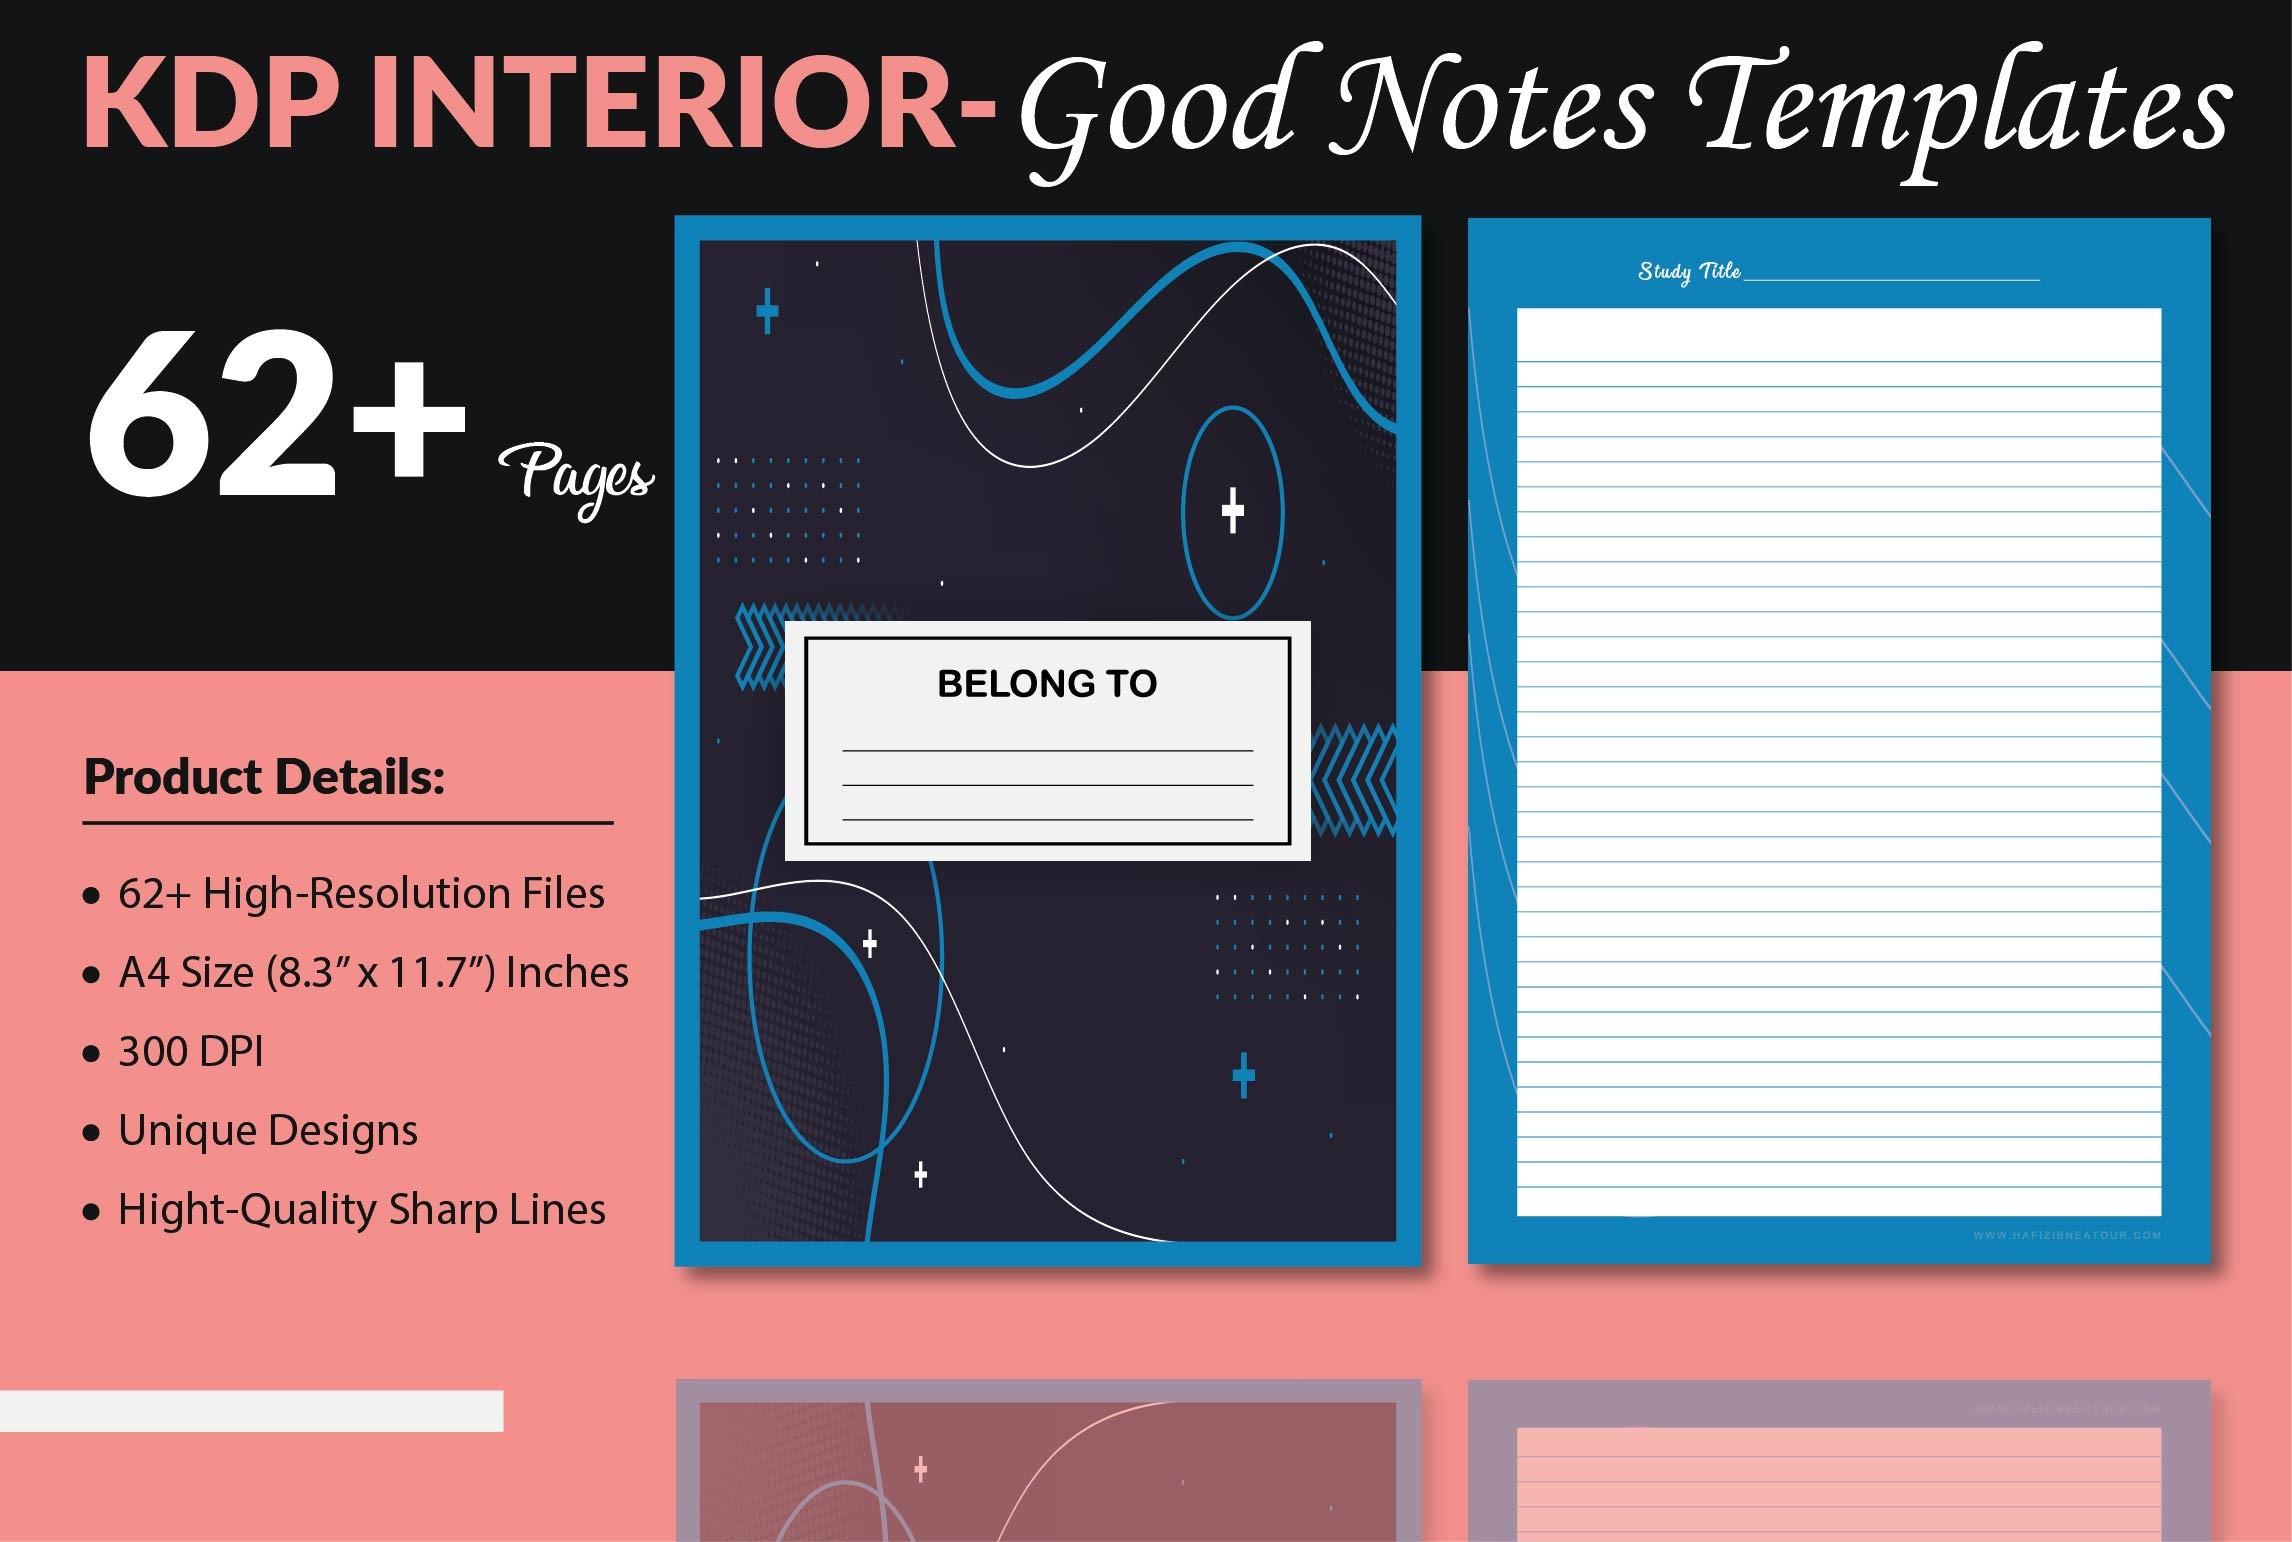 Good Notes Templates - KDP Interior